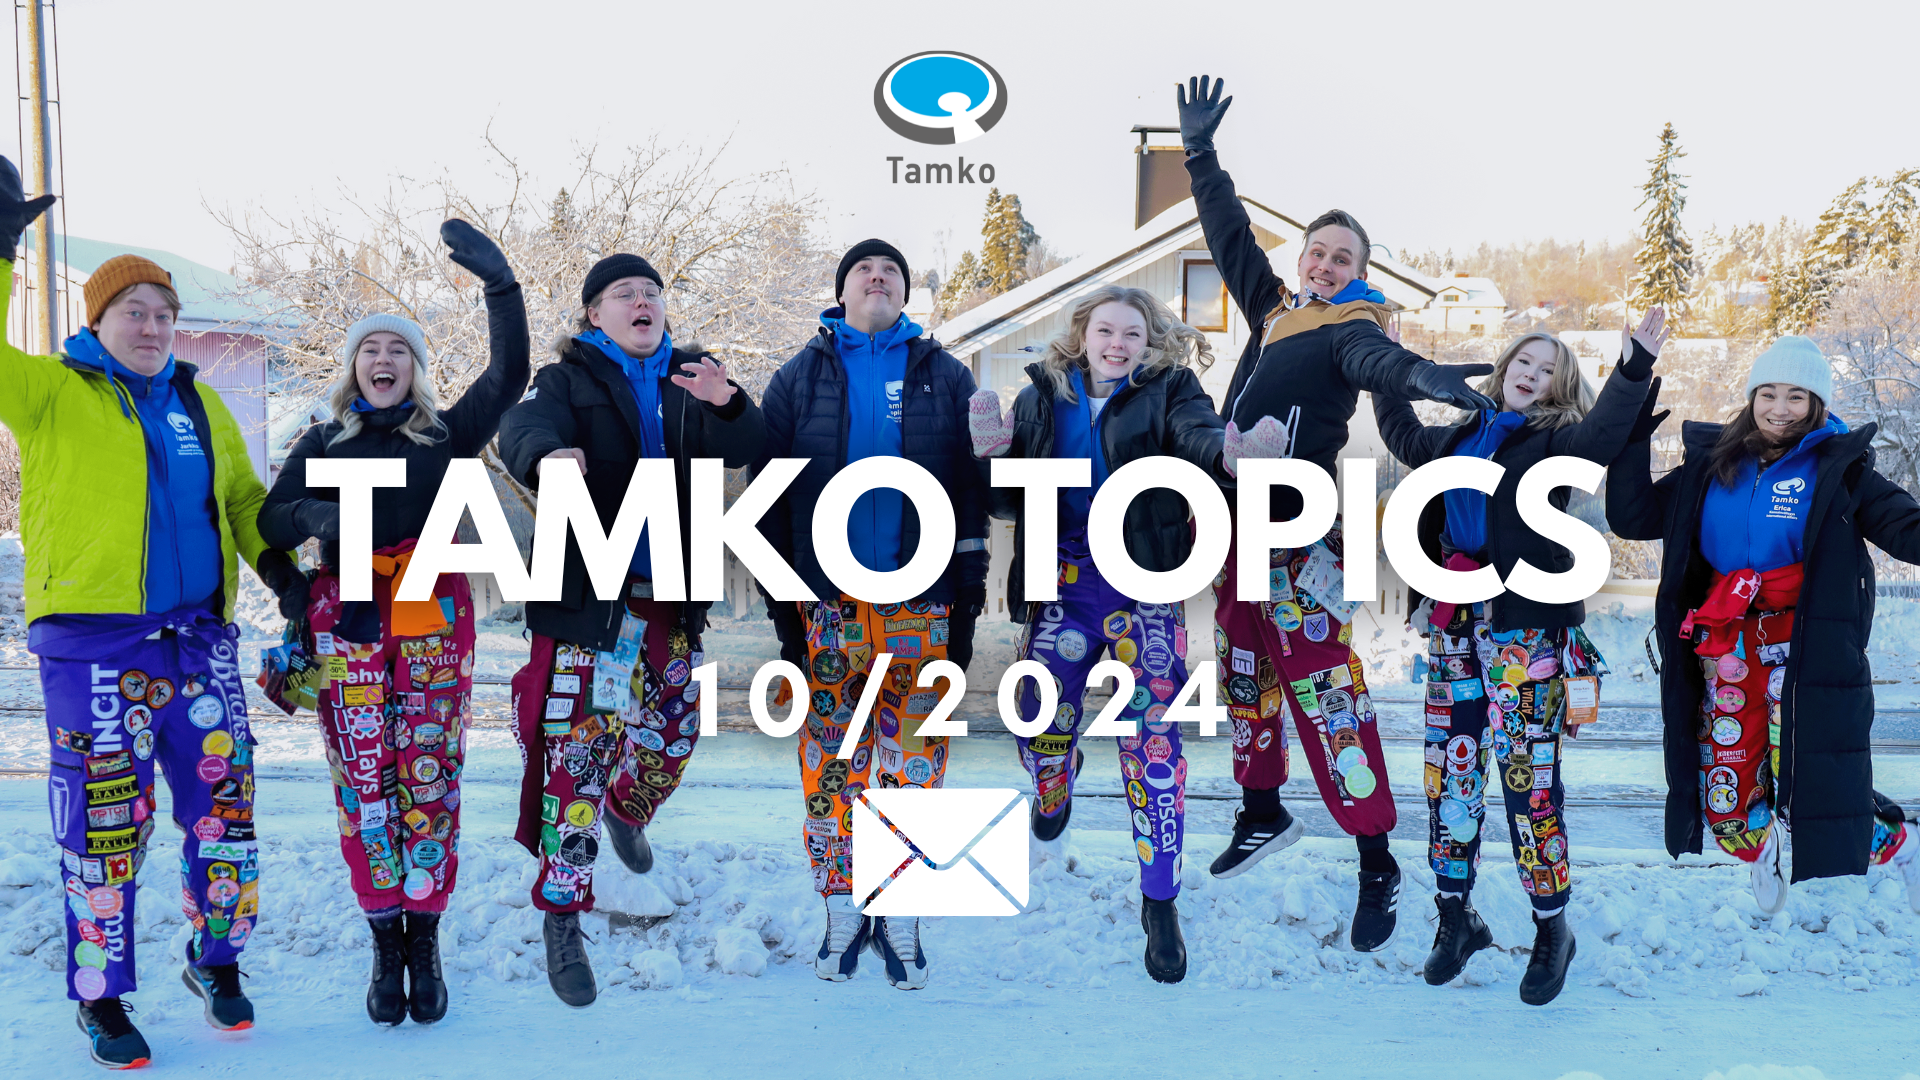 Tamko Topics 10/2024